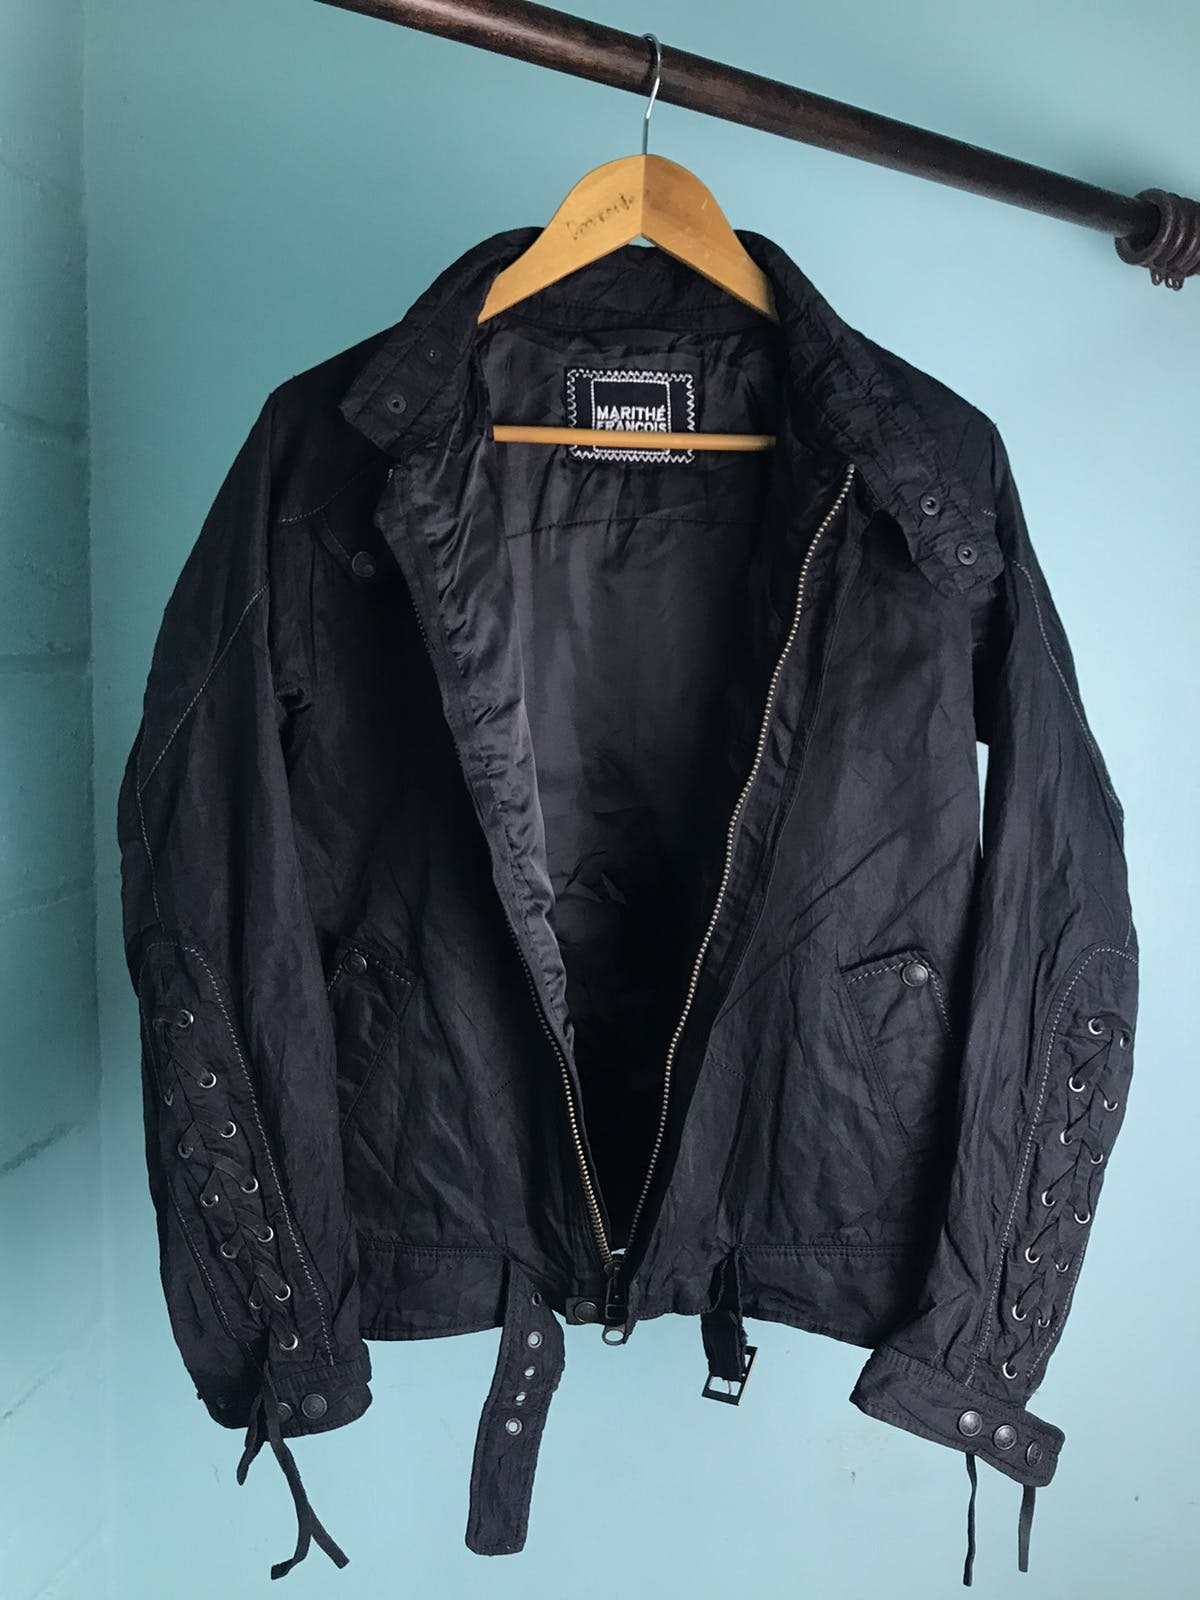 90s Marithe Francois Girbaud Motorcycle Style Jacket